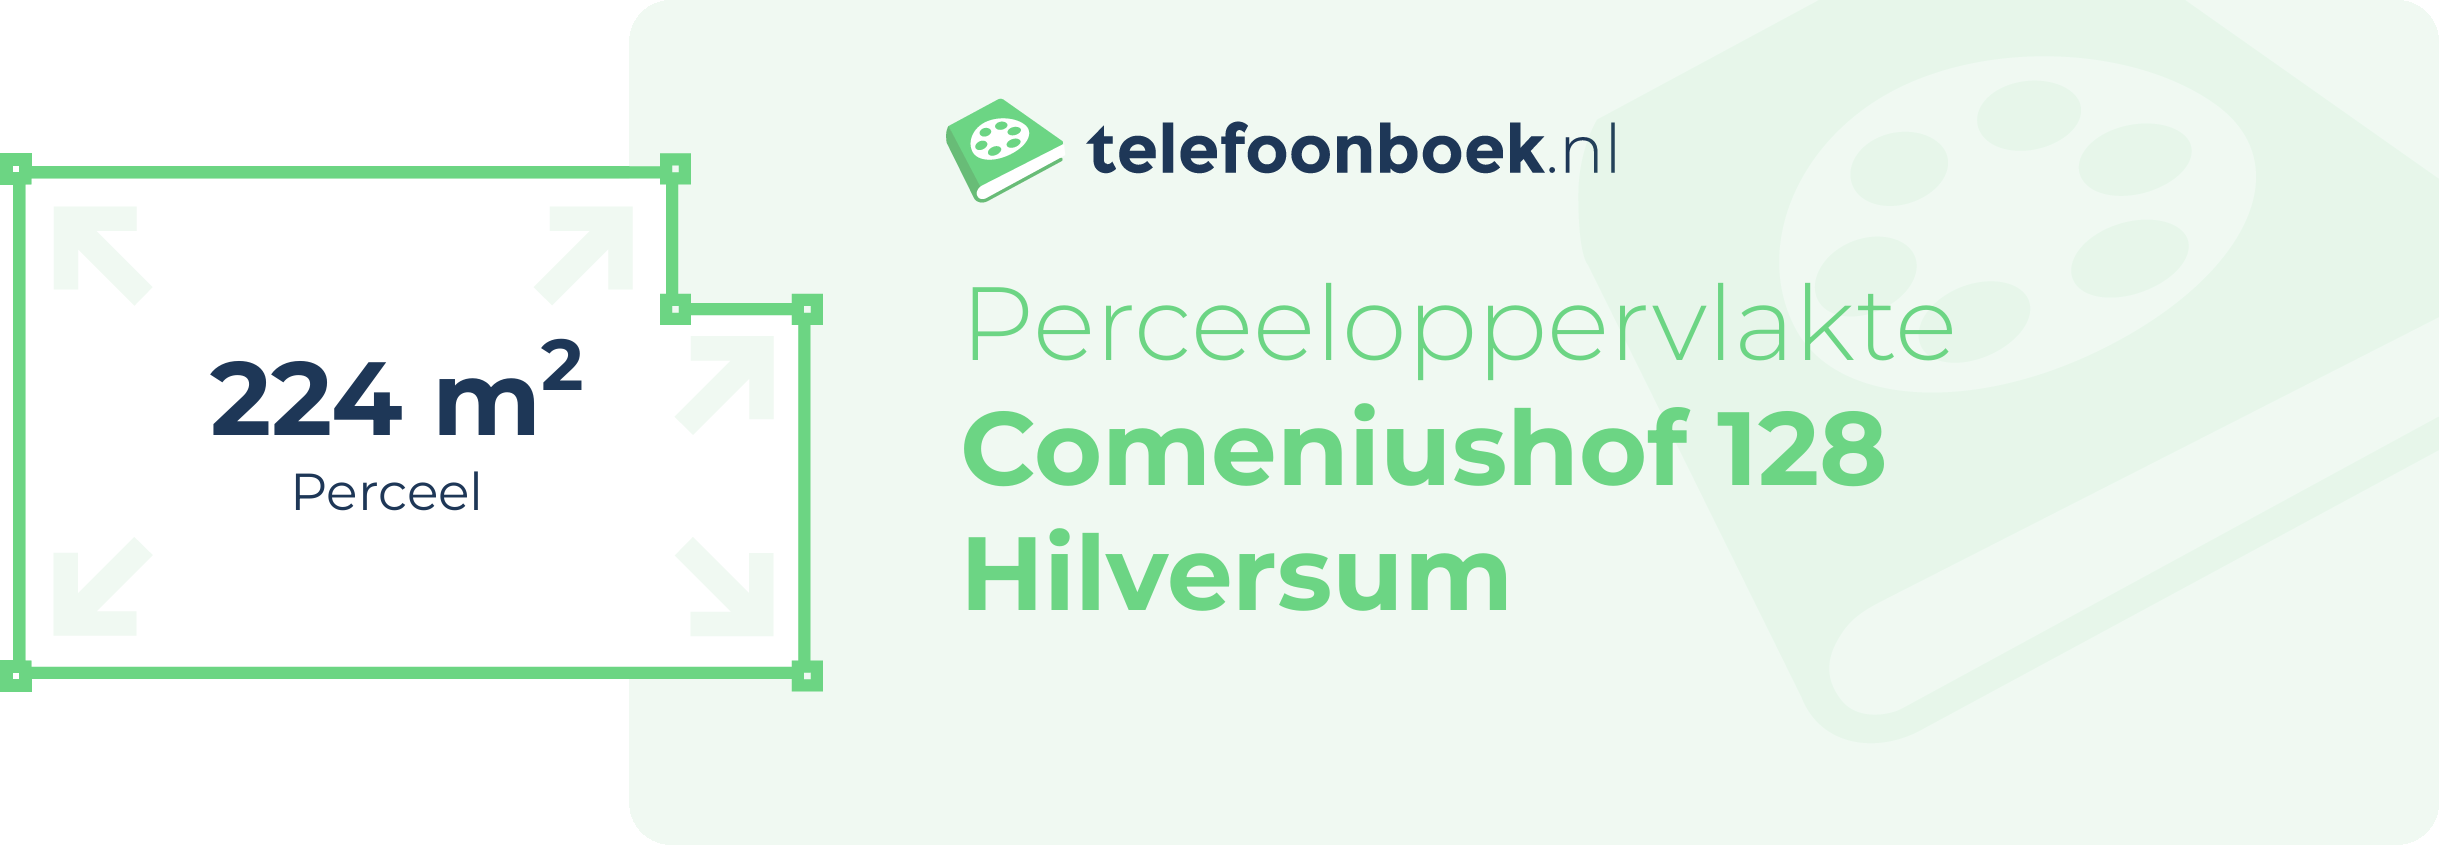 Perceeloppervlakte Comeniushof 128 Hilversum